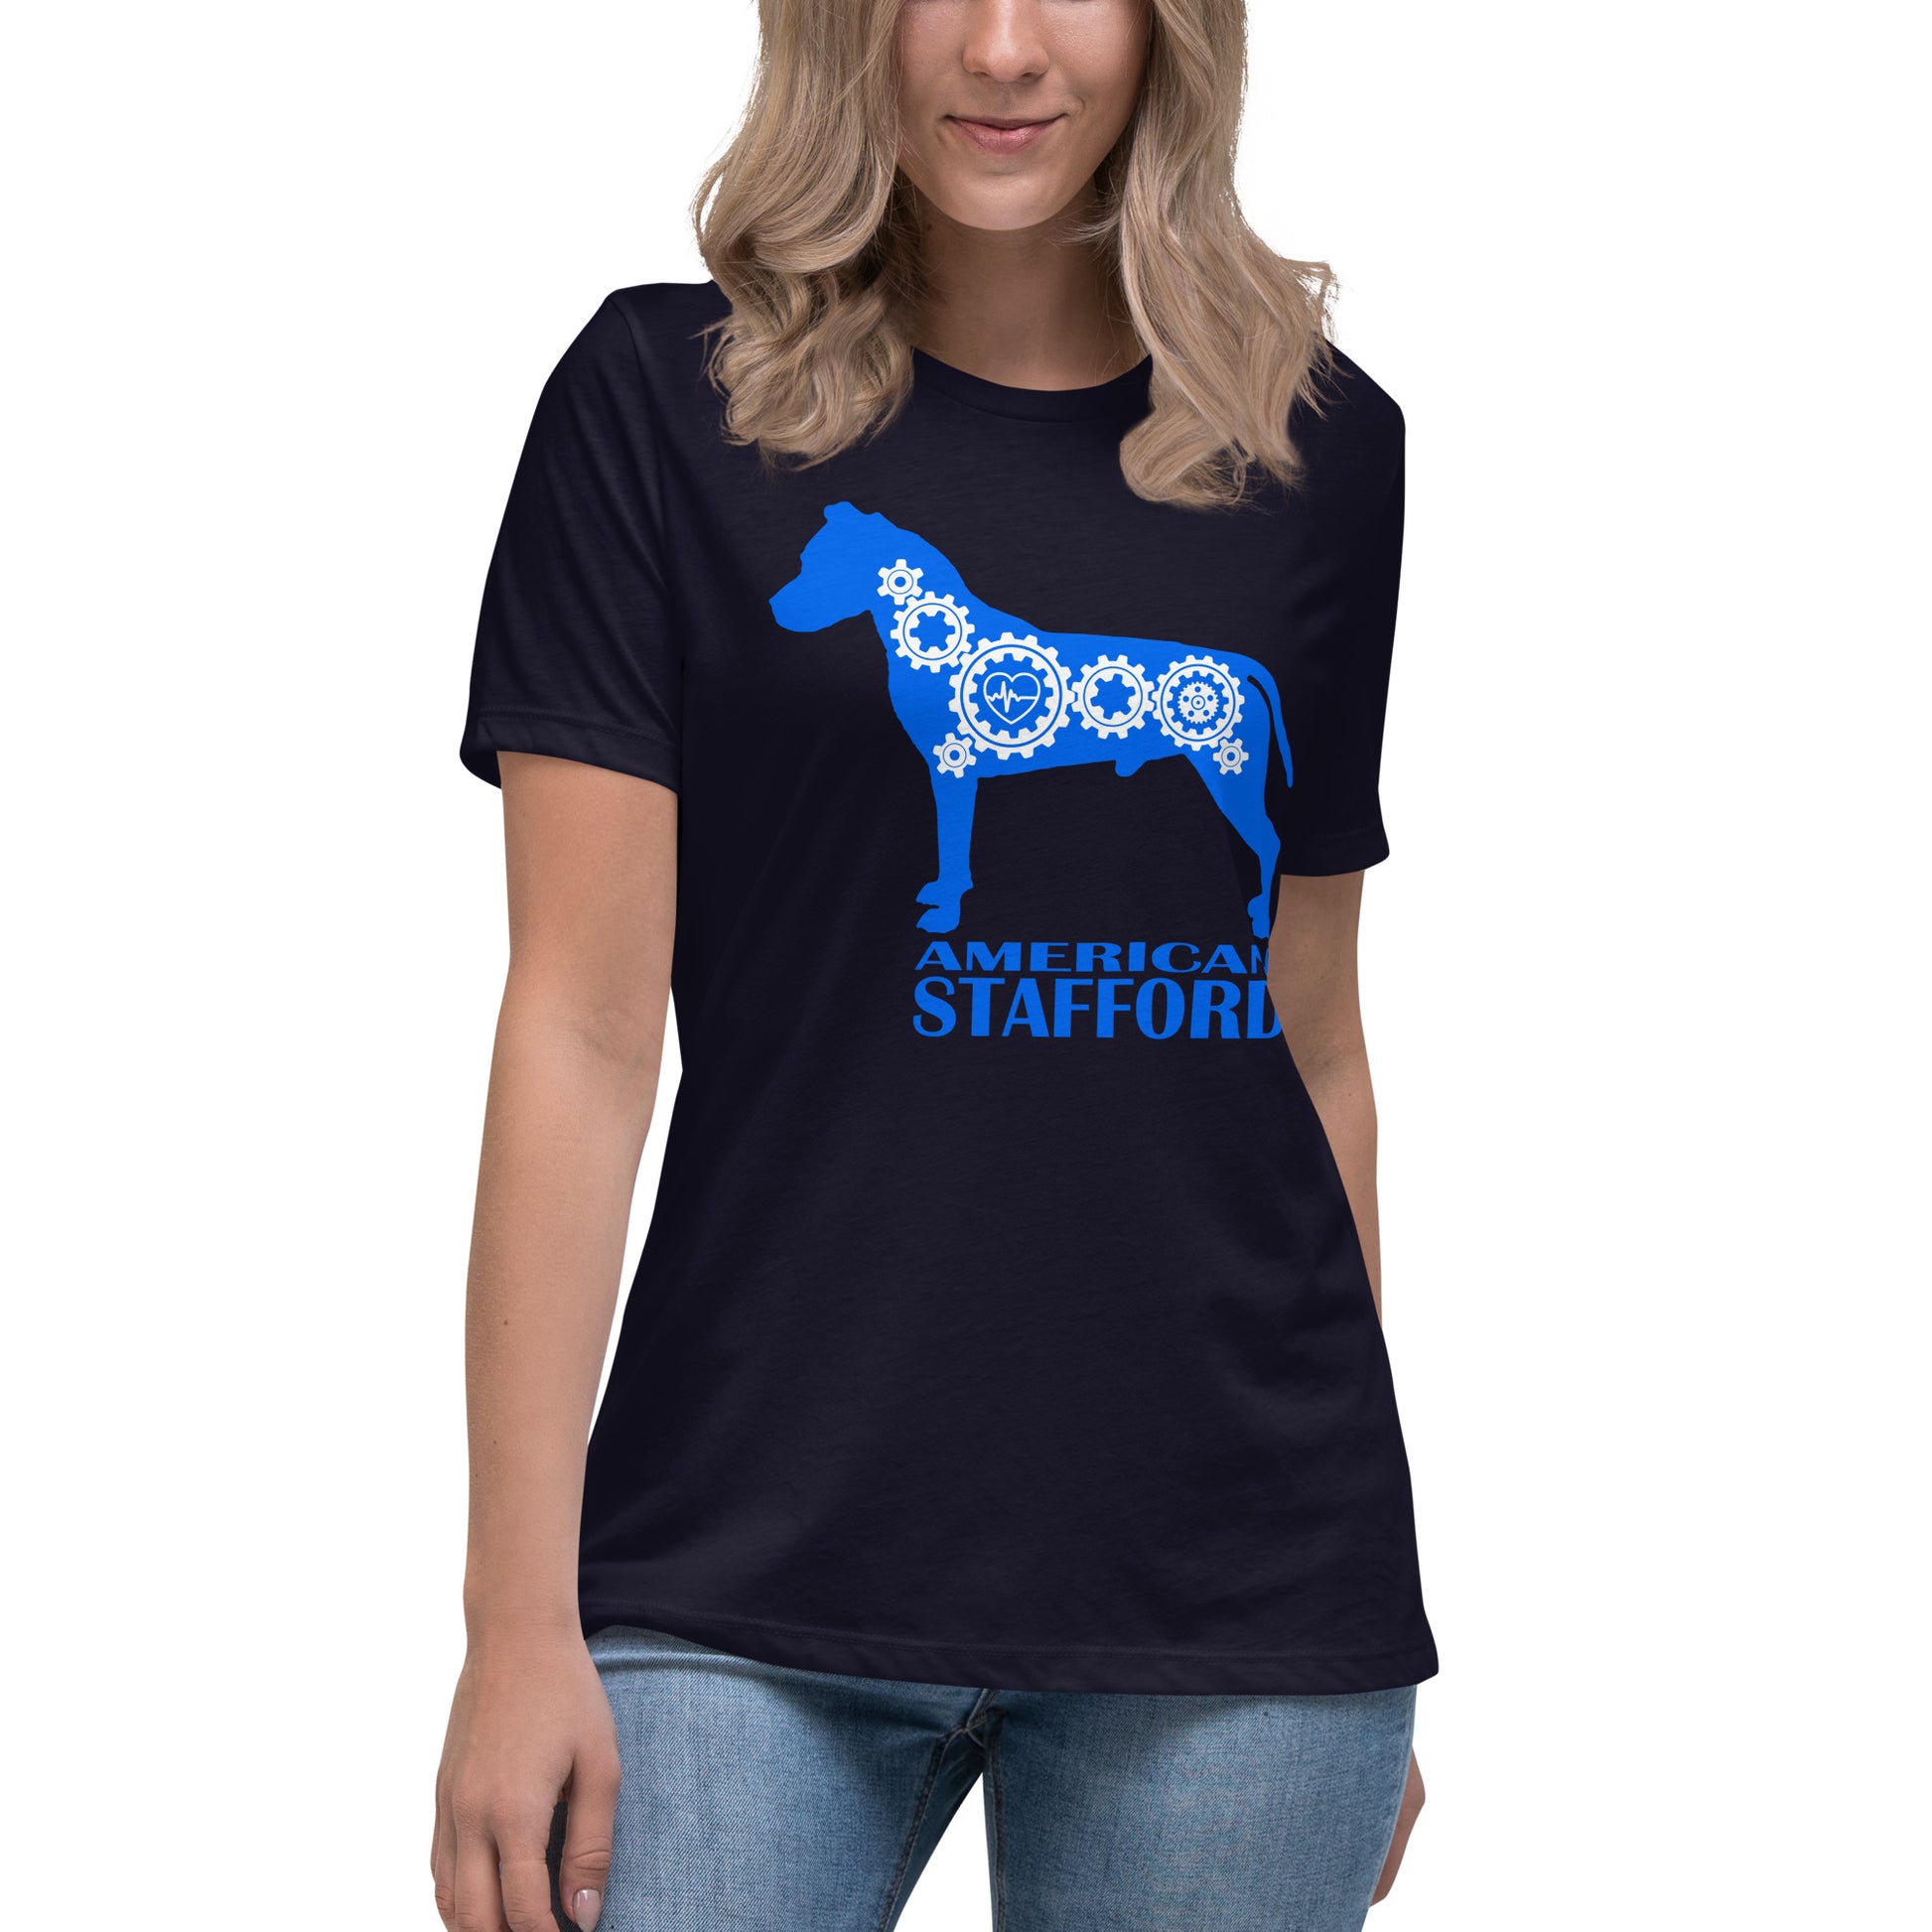 American Stafford Bionic women’s navy t-shirt by Dog Artistry.